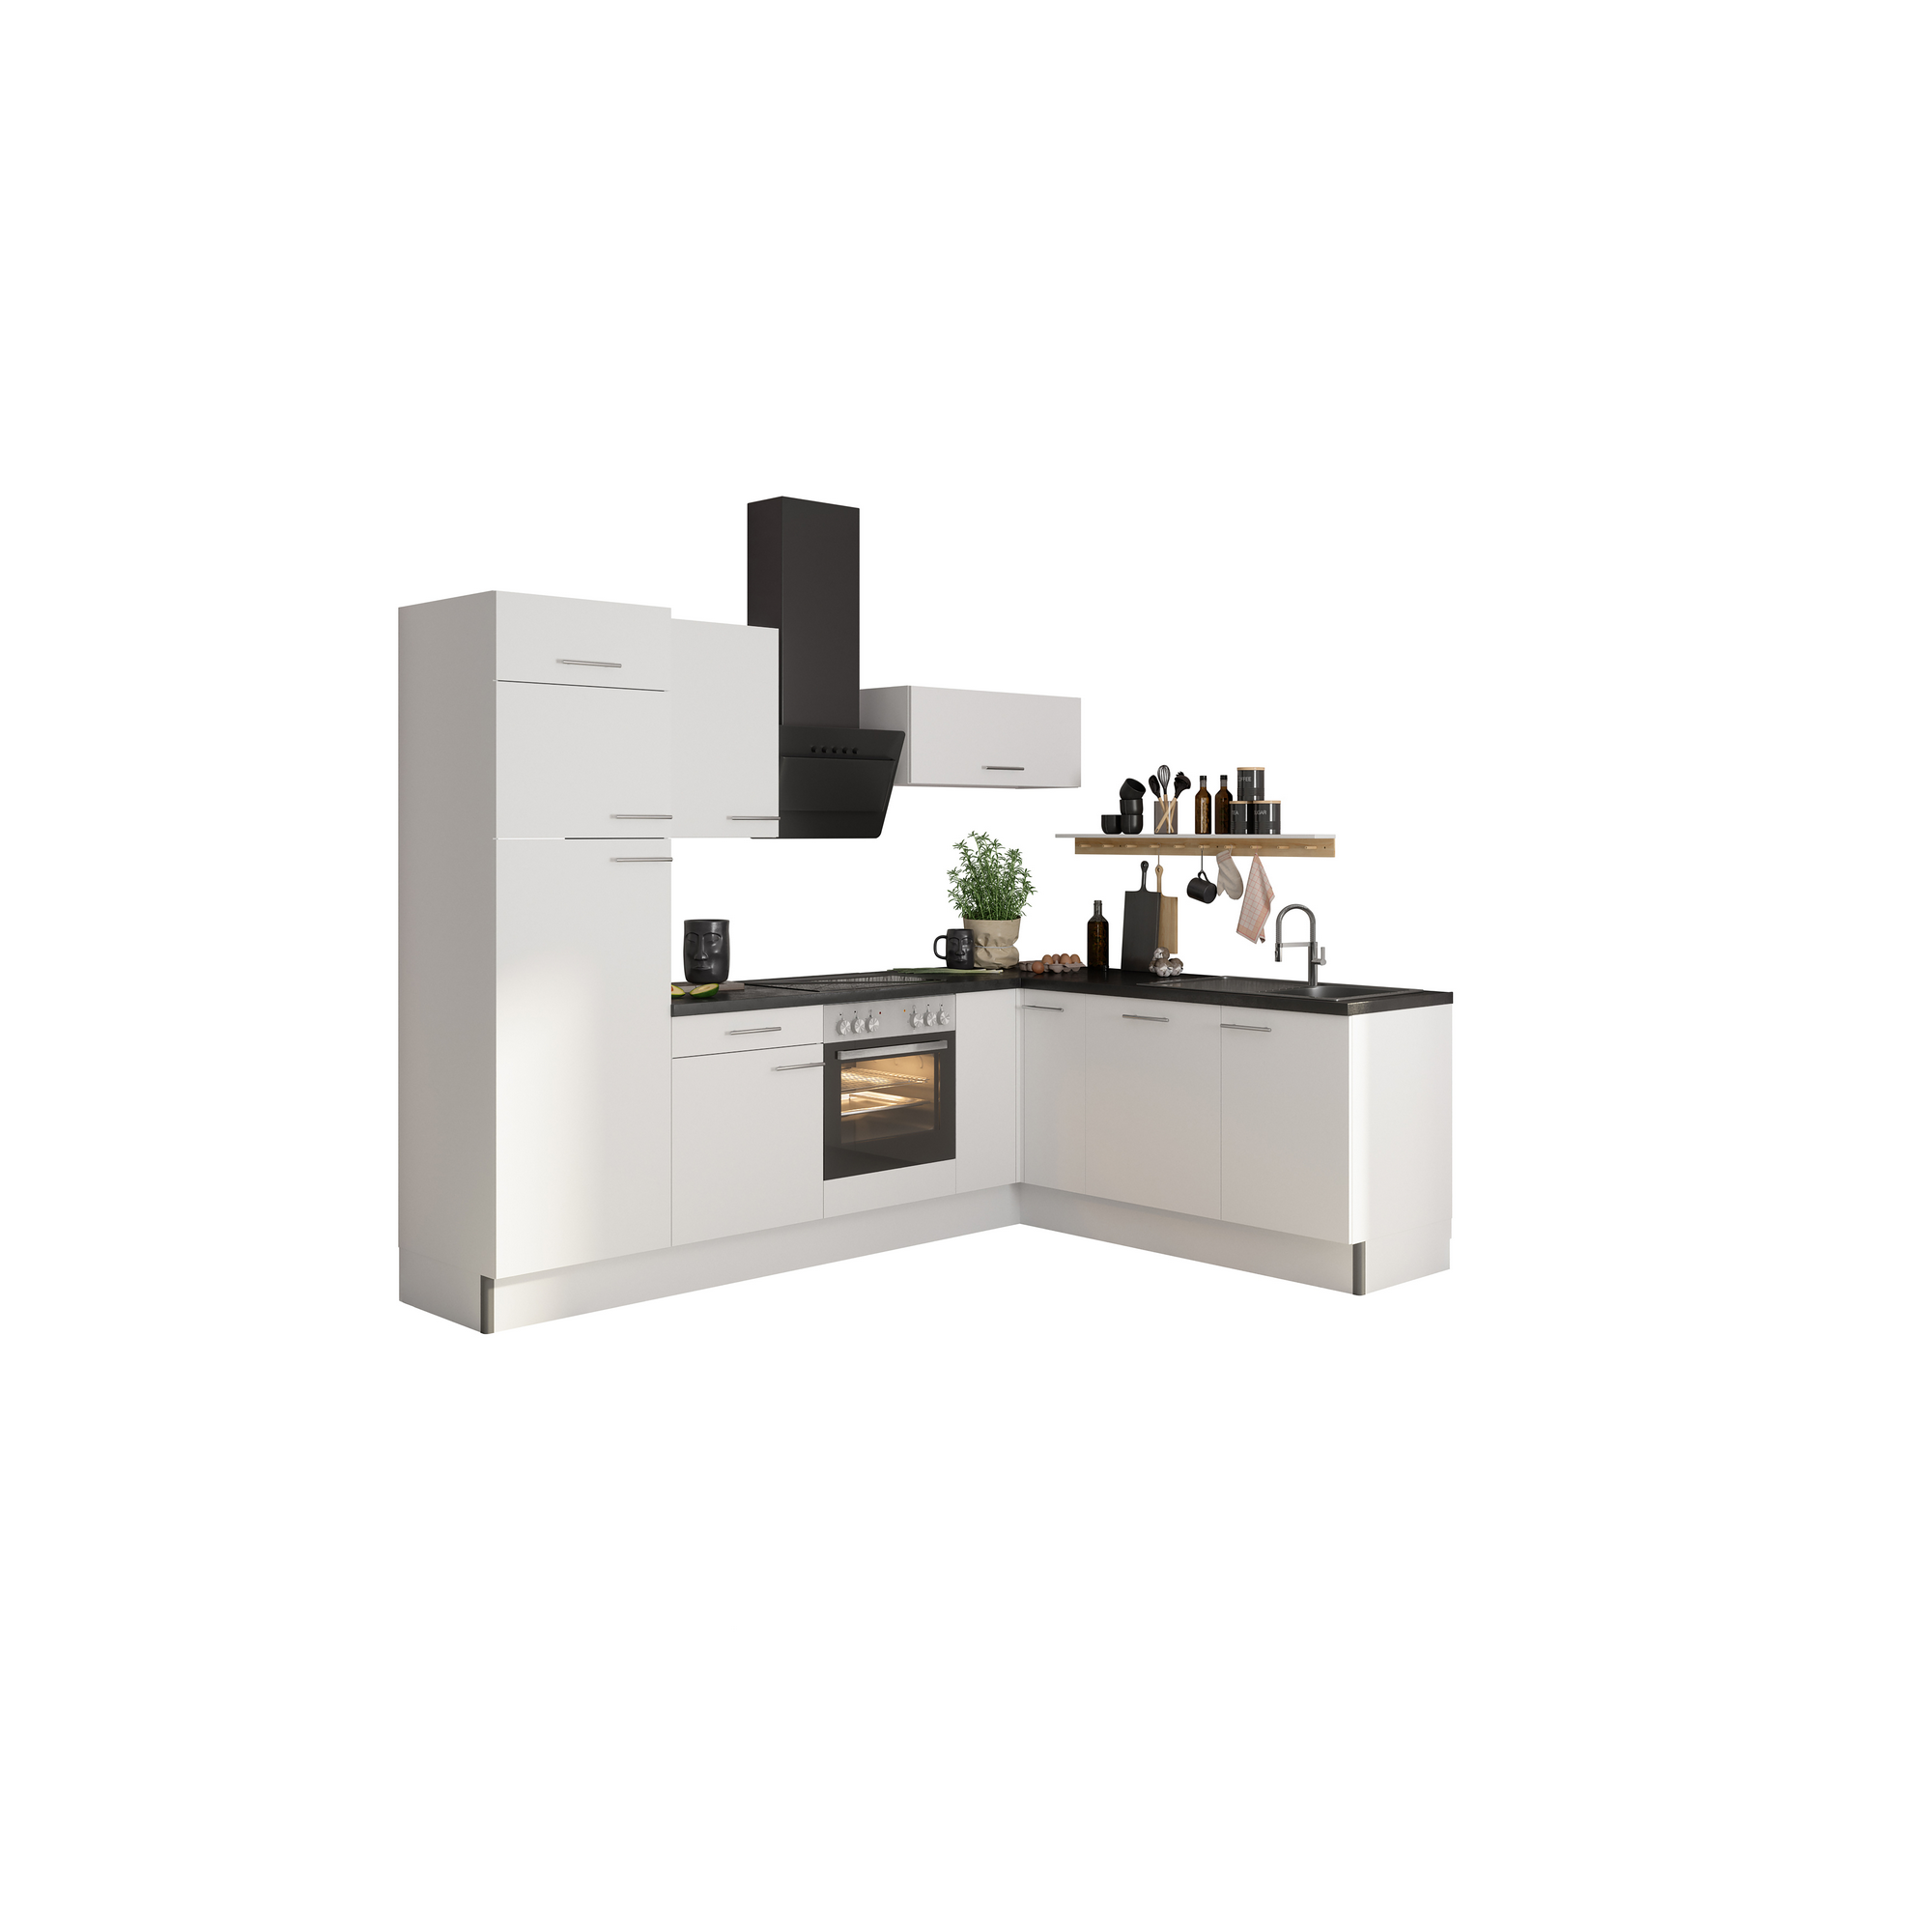 Winkelküche mit E-Geräten 'OPTIkoncept Bengt932' weiß 270 cm + product picture